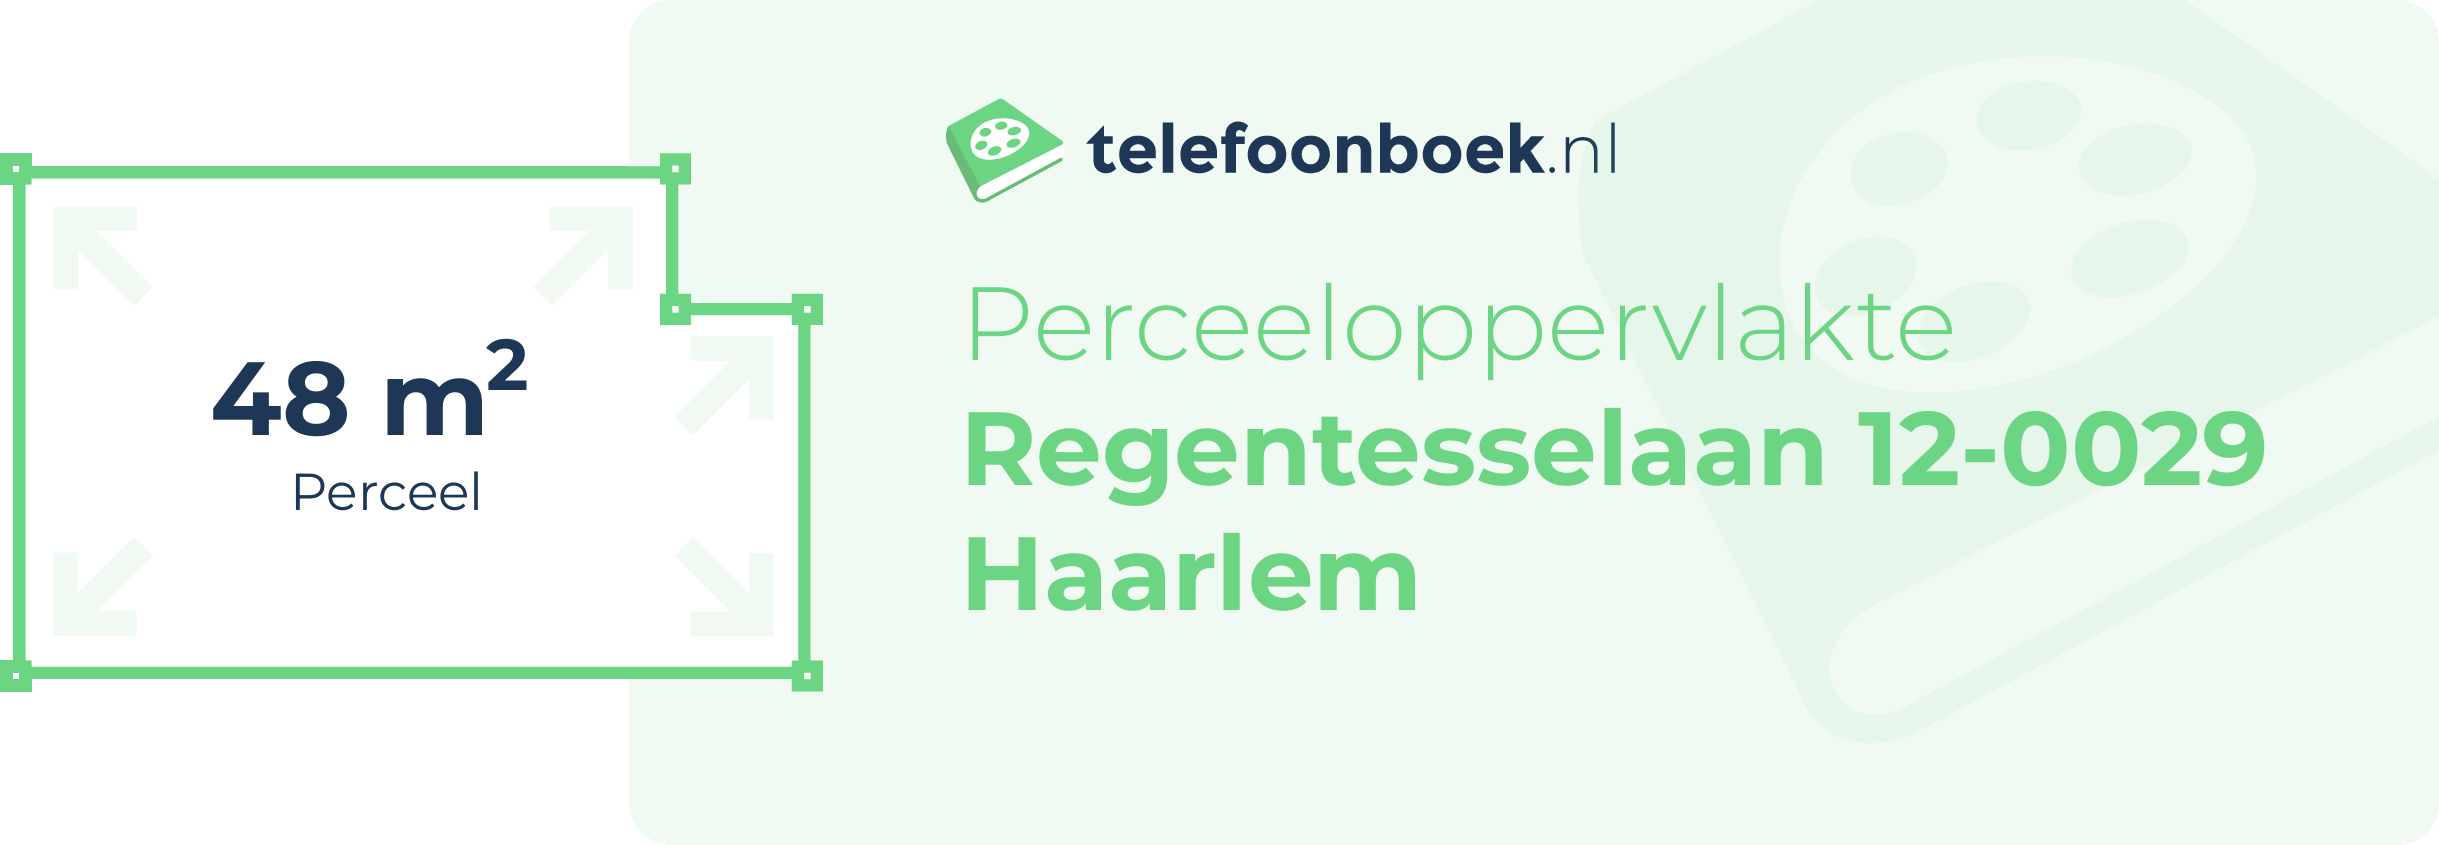 Perceeloppervlakte Regentesselaan 12-0029 Haarlem